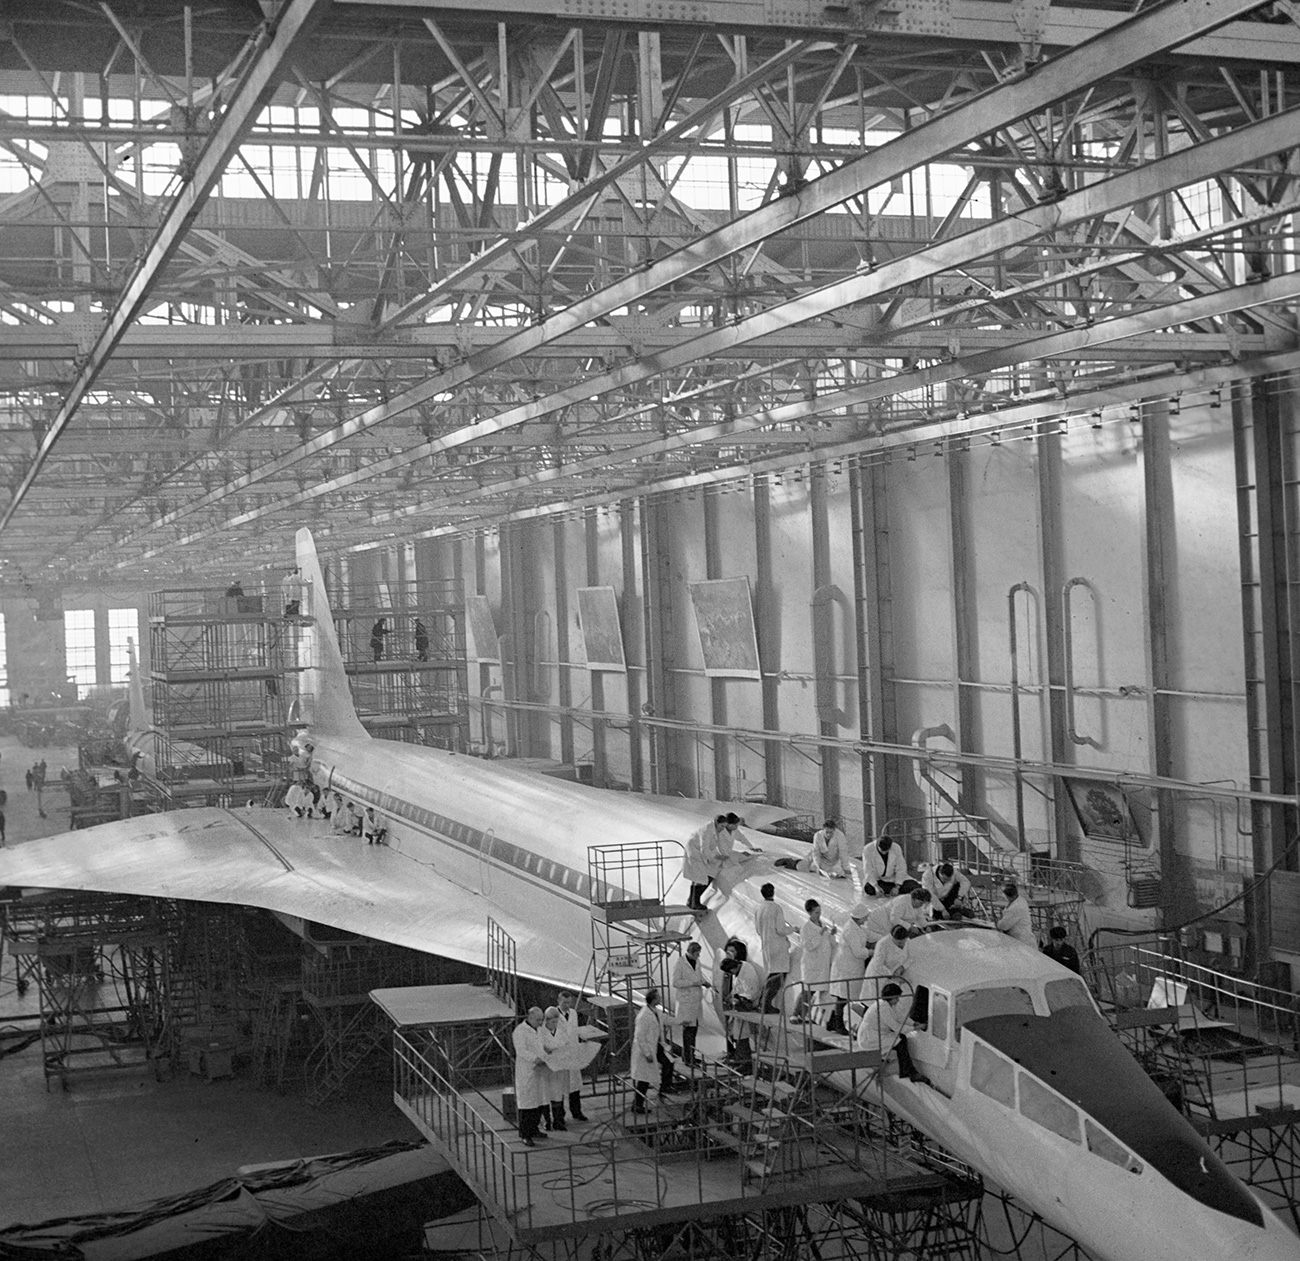 Experts of Voronezh aircraft factory assemble Tupolev Tu-144 Charger supersonic transport. Source: Yuriy Ivanov/RIA Novosti